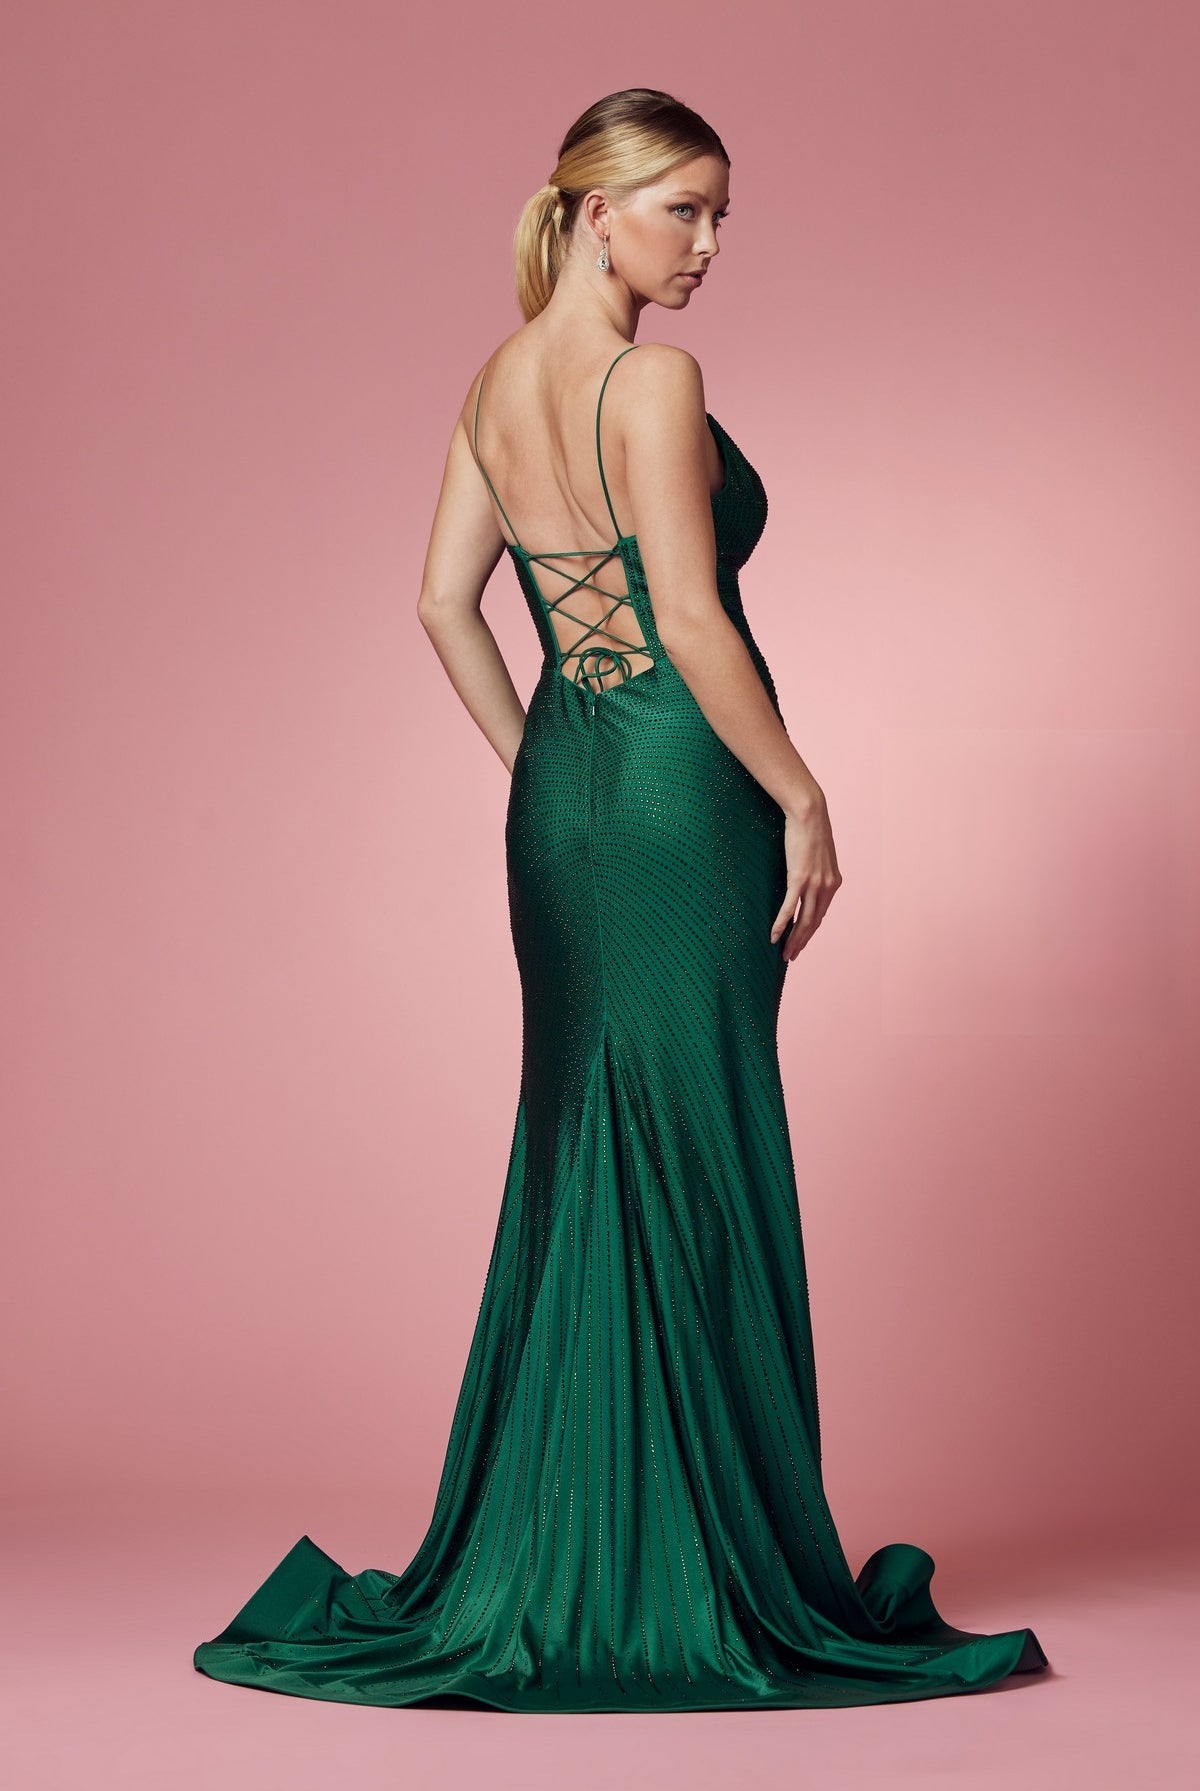 Embellished Jewel Side Slit Long Bridesmaid & Prom Dress NXE1038-Prom Dress-smcfashion.com